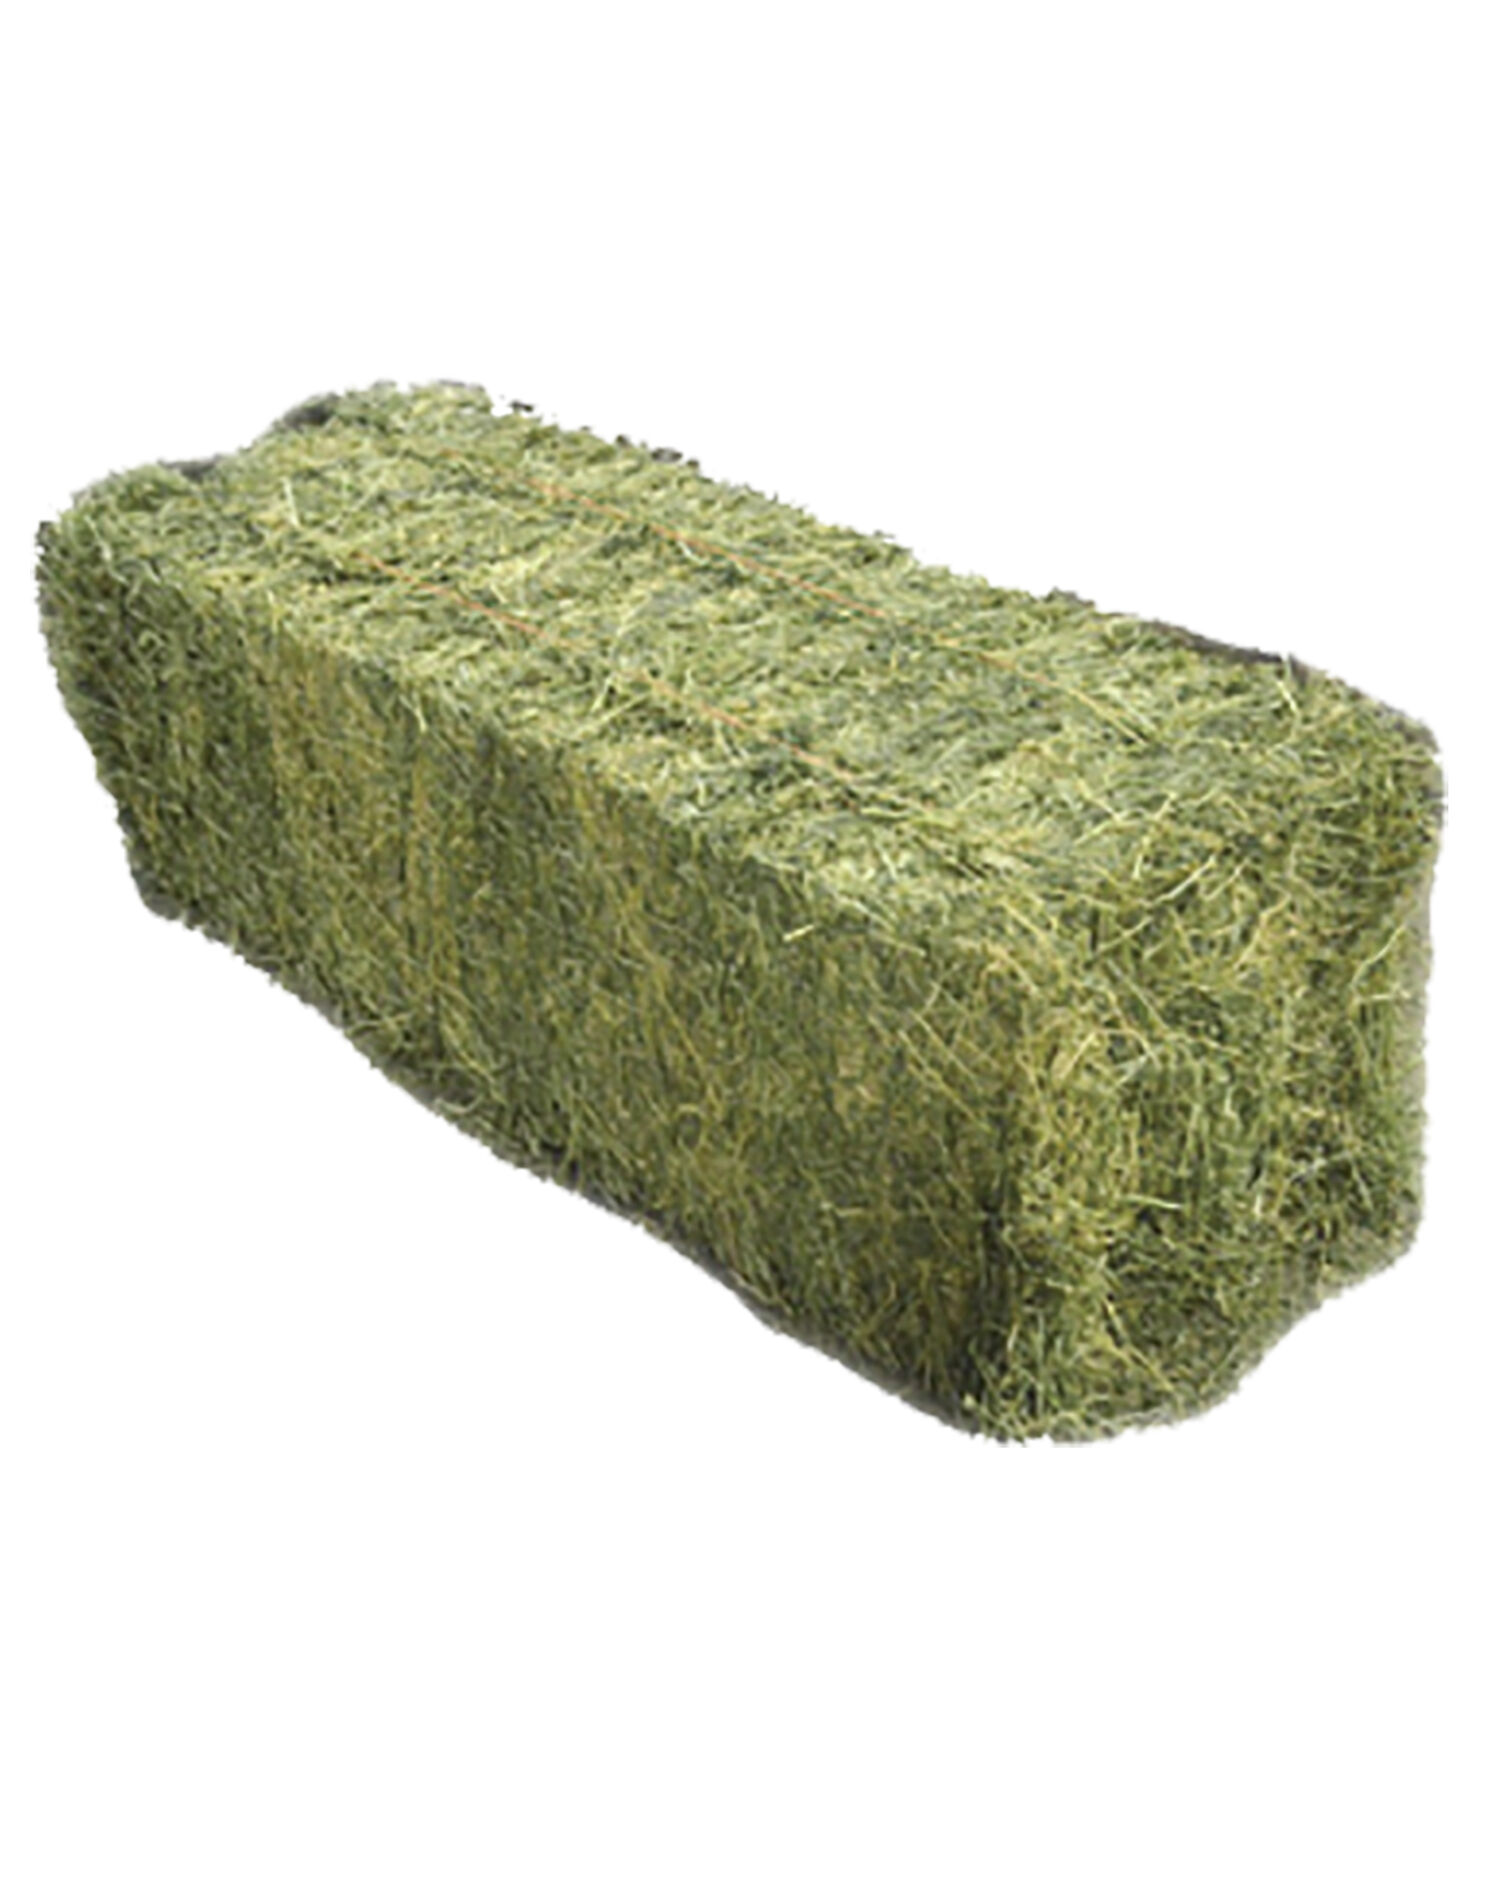 Orchard-Alfalfa-Mix-Grass-Hay-Bale.jpg